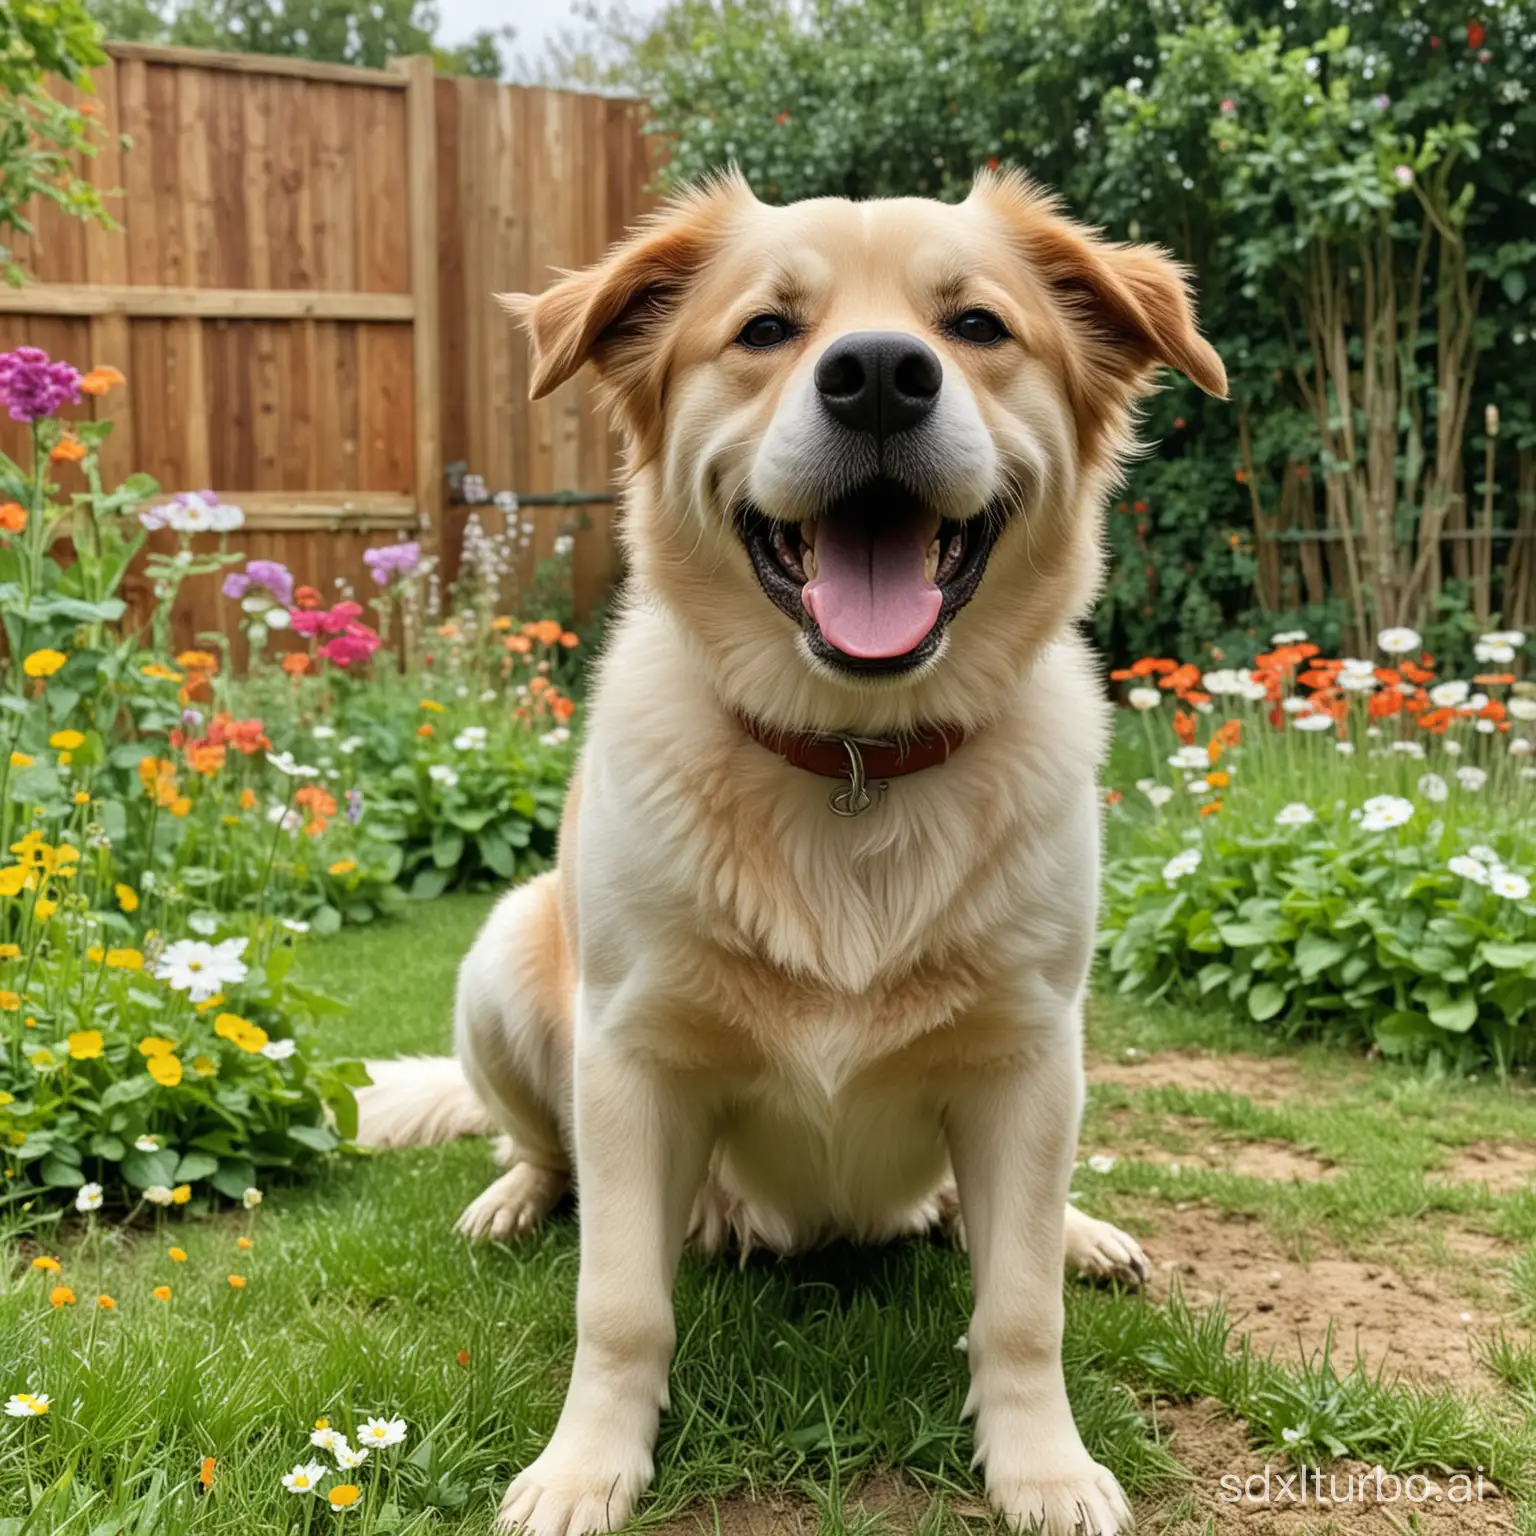 Joyful-Dog-Playing-in-a-Vibrant-Garden